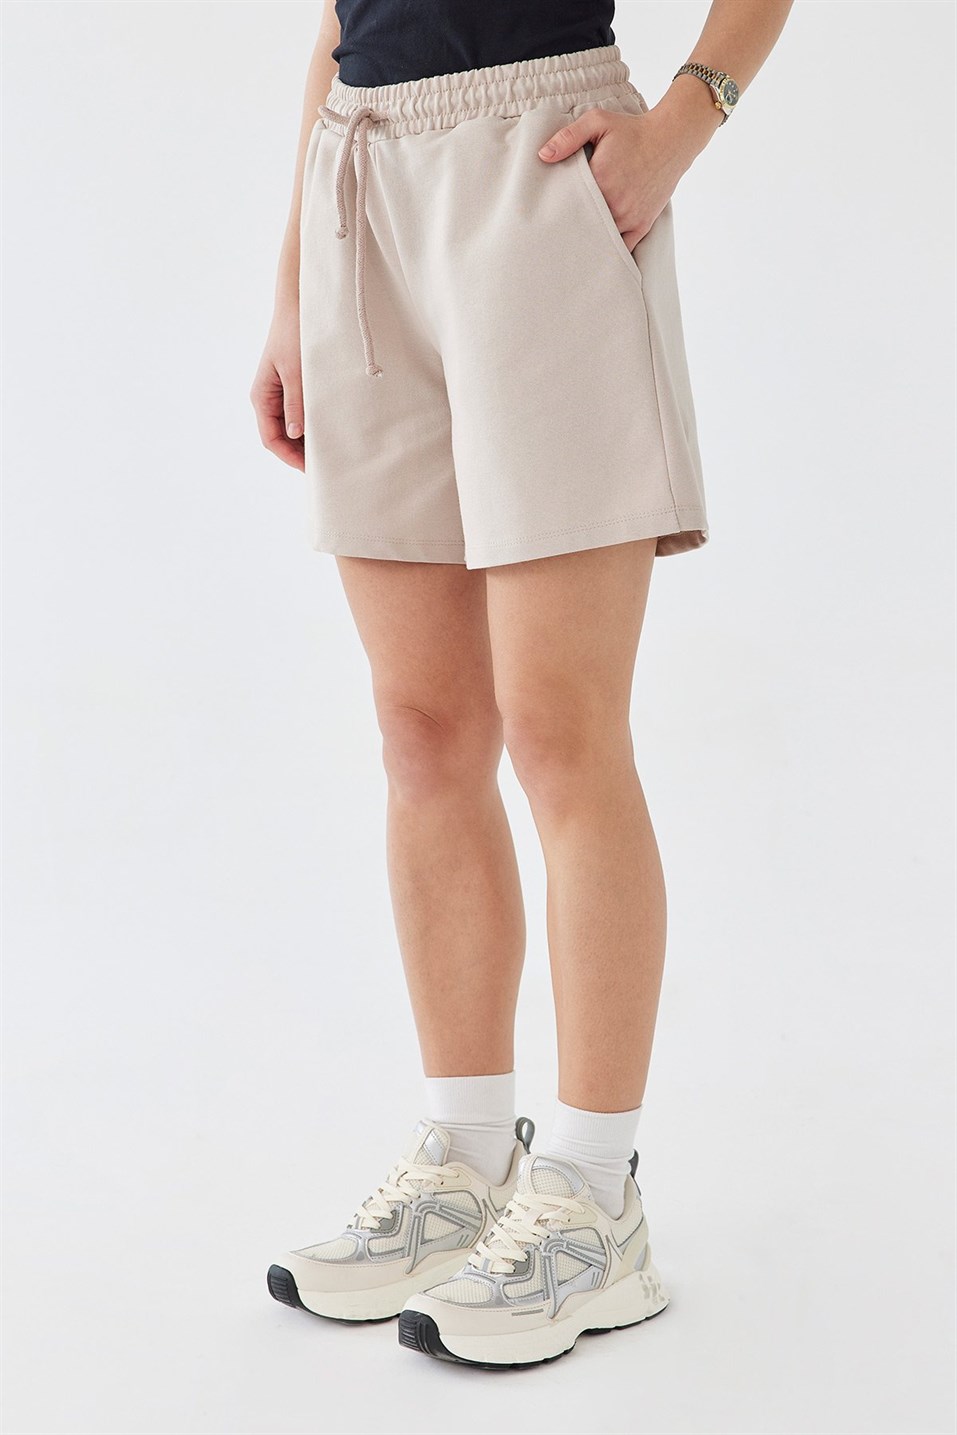 Beige Cotton Shorts